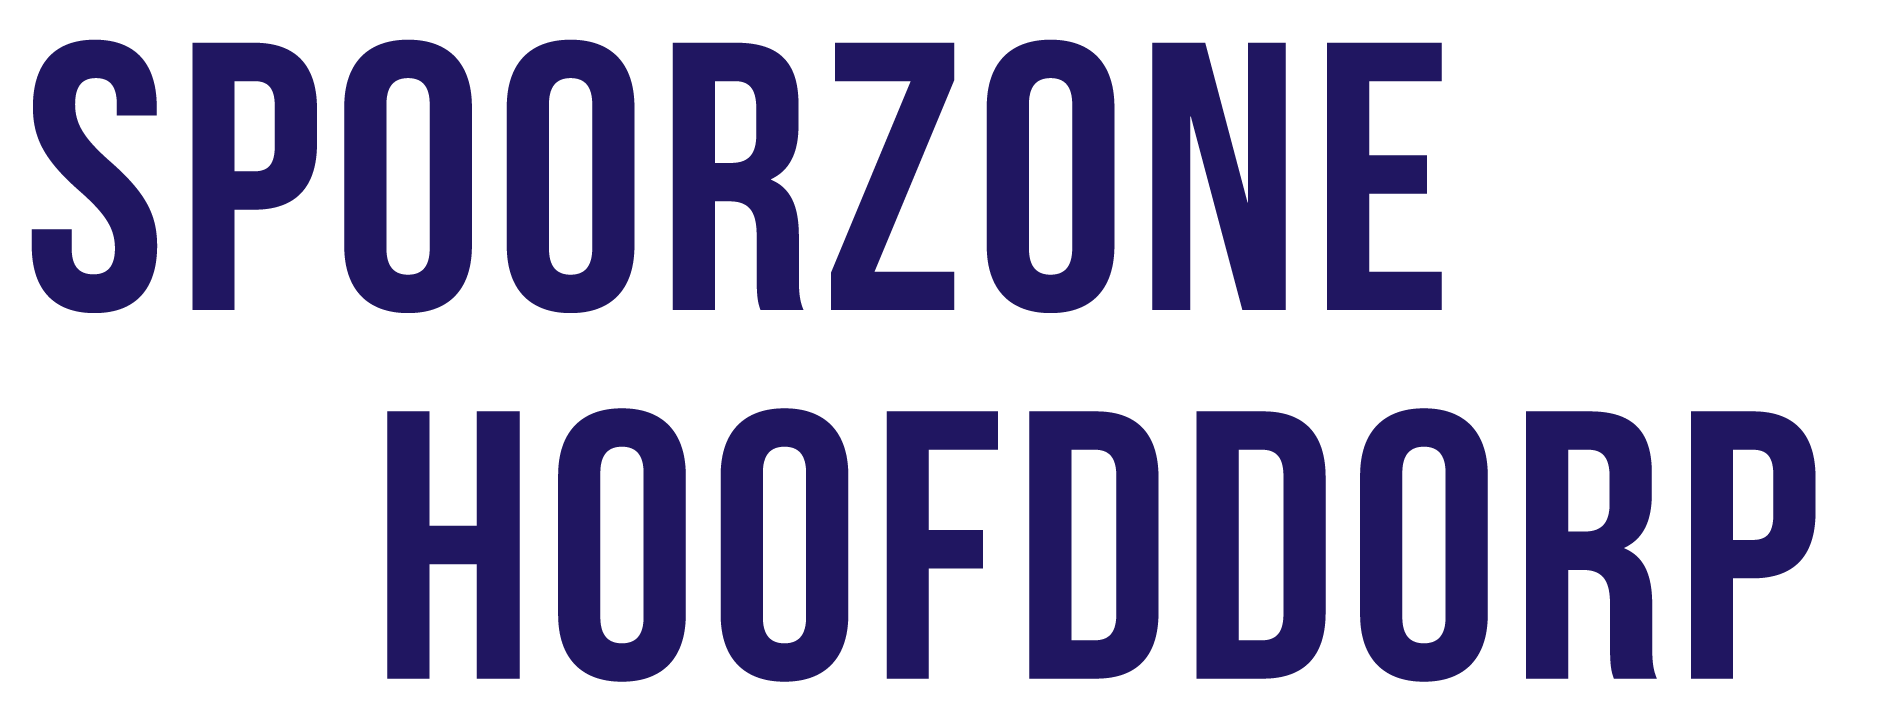 Spoorzone Hoofddorp logo